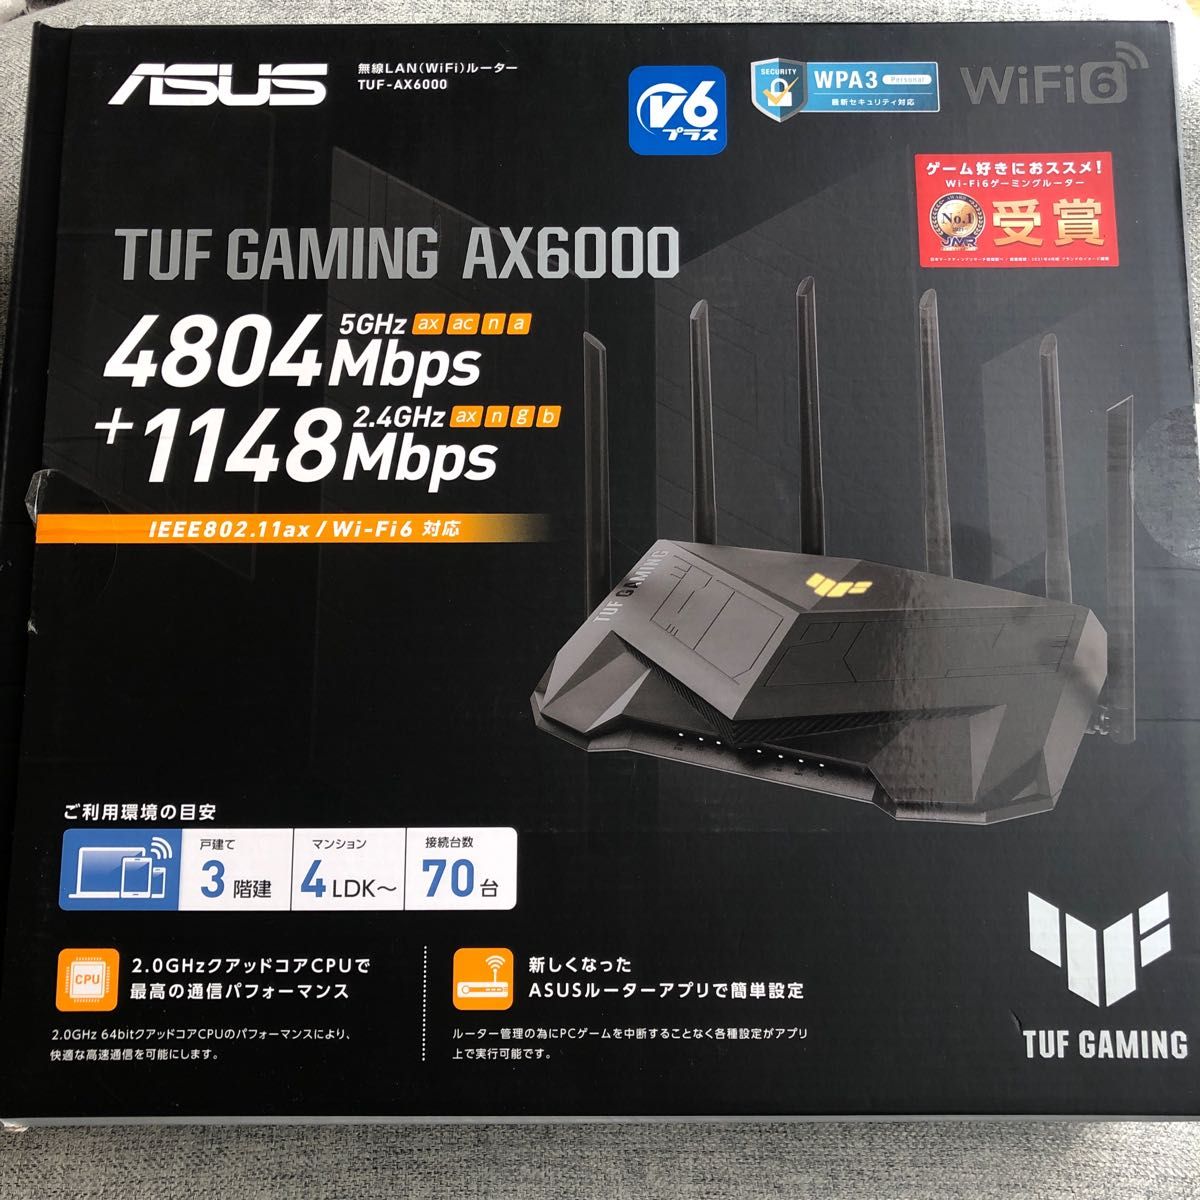 ASUS WiFi TUF-AX6000 無線 ルーター 最新規格WiFi6 4804+1148Mbps v6